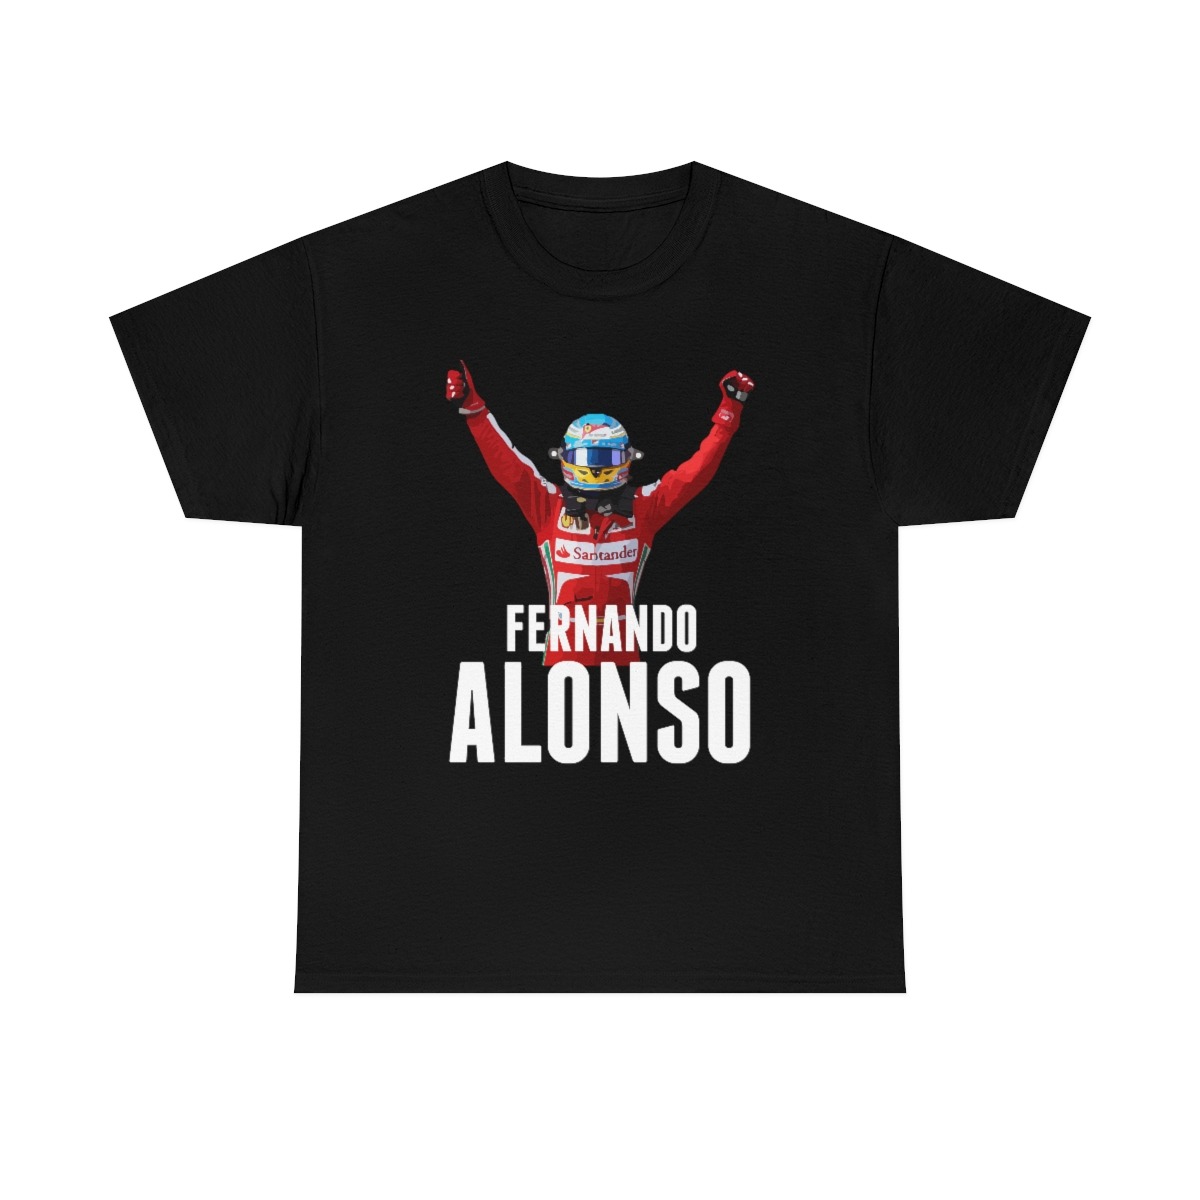 Fernando Alonso - Ferrari - Victory tshirt